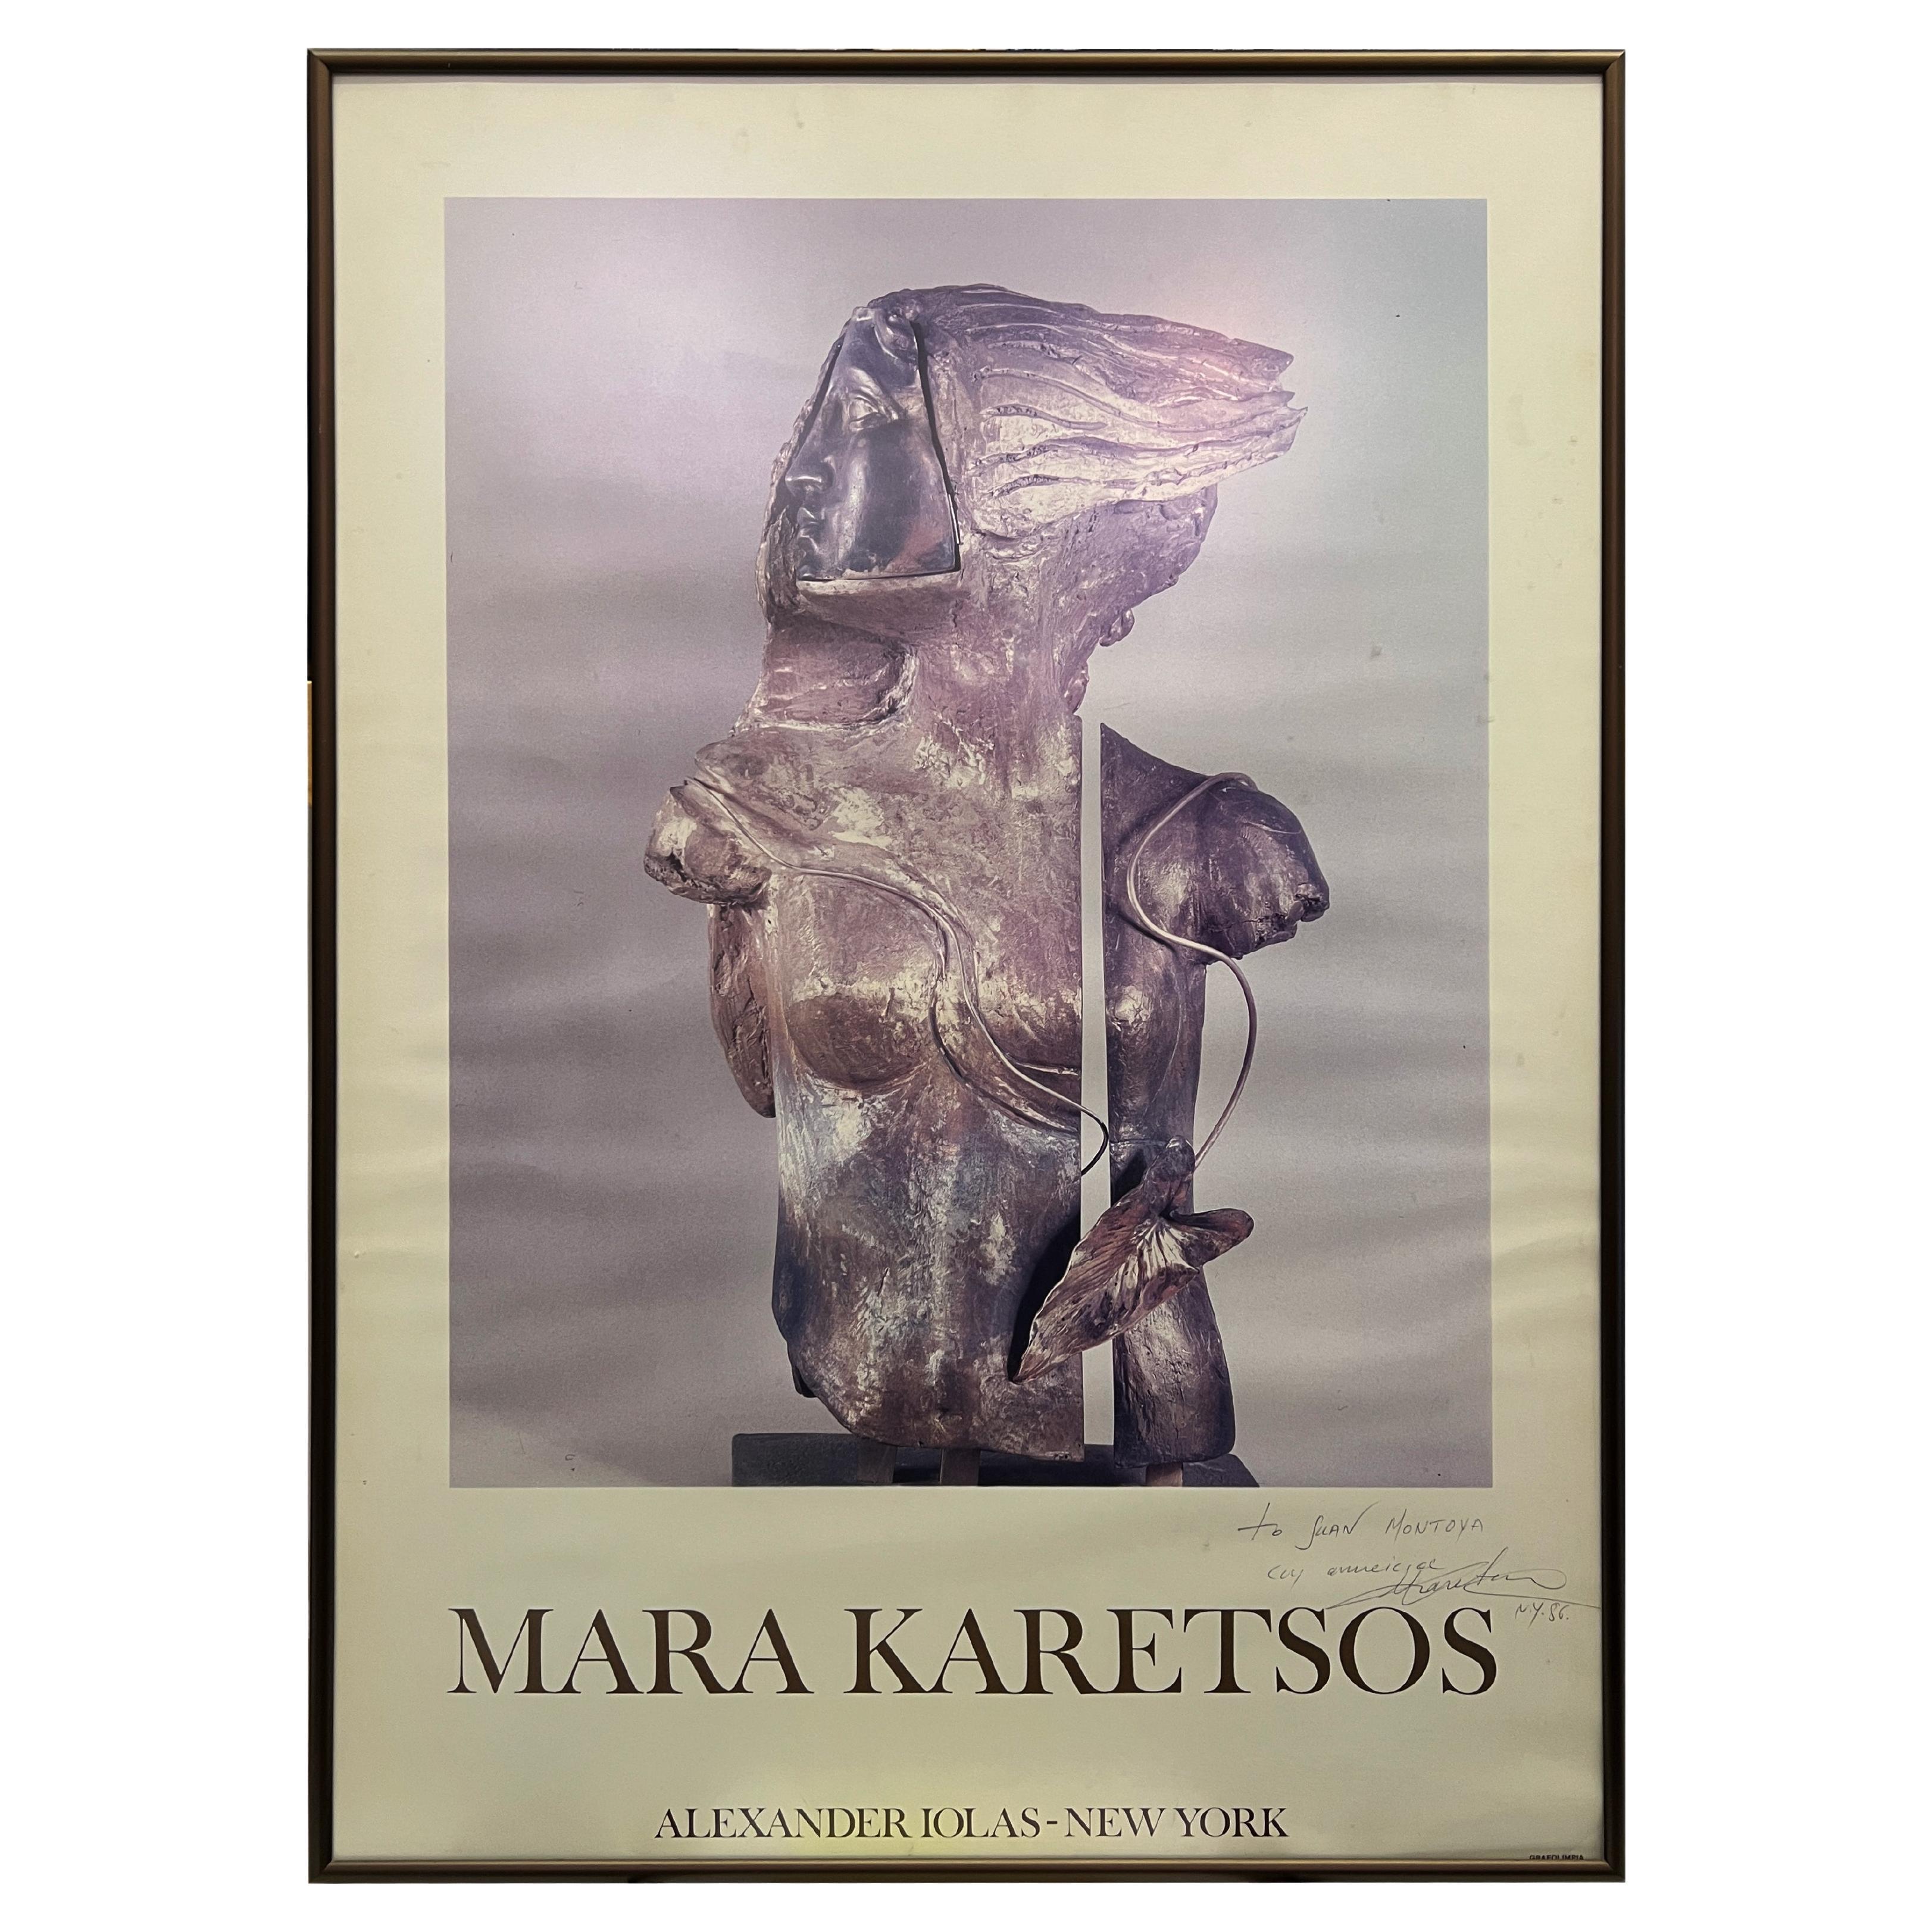 Mara Karetsos 1970er Jahre Poster aus der Galerie Alexandre Iolas